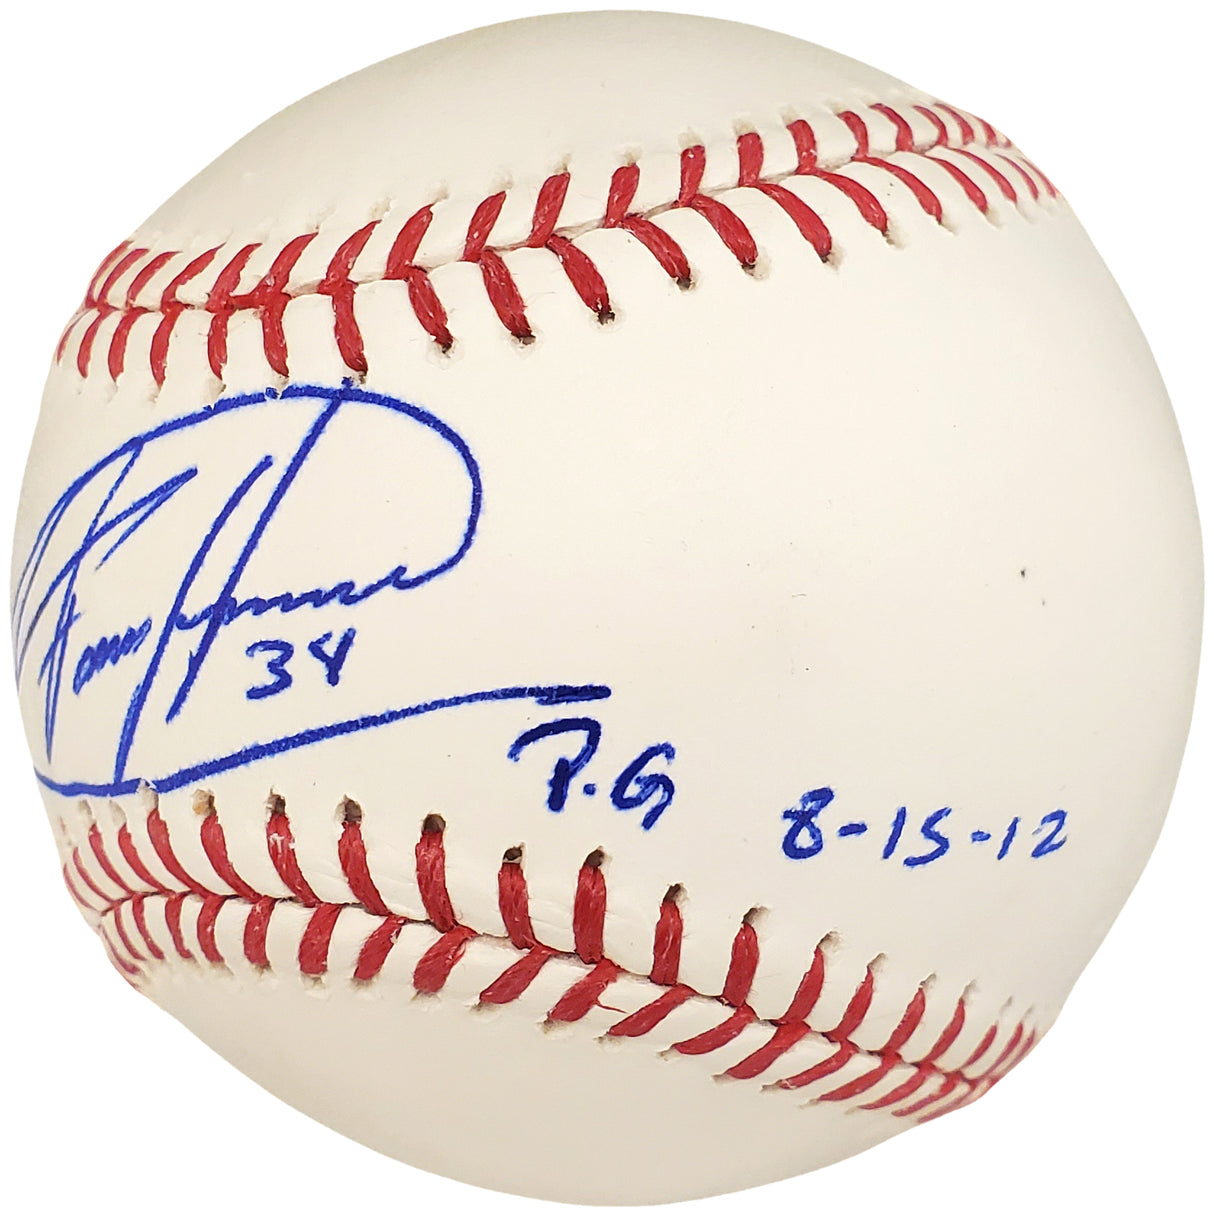 Felix Hernandez Autographed Official MLB Baseball Seattle Mariners "PG 8-15-12" PSA/DNA Stock #28190